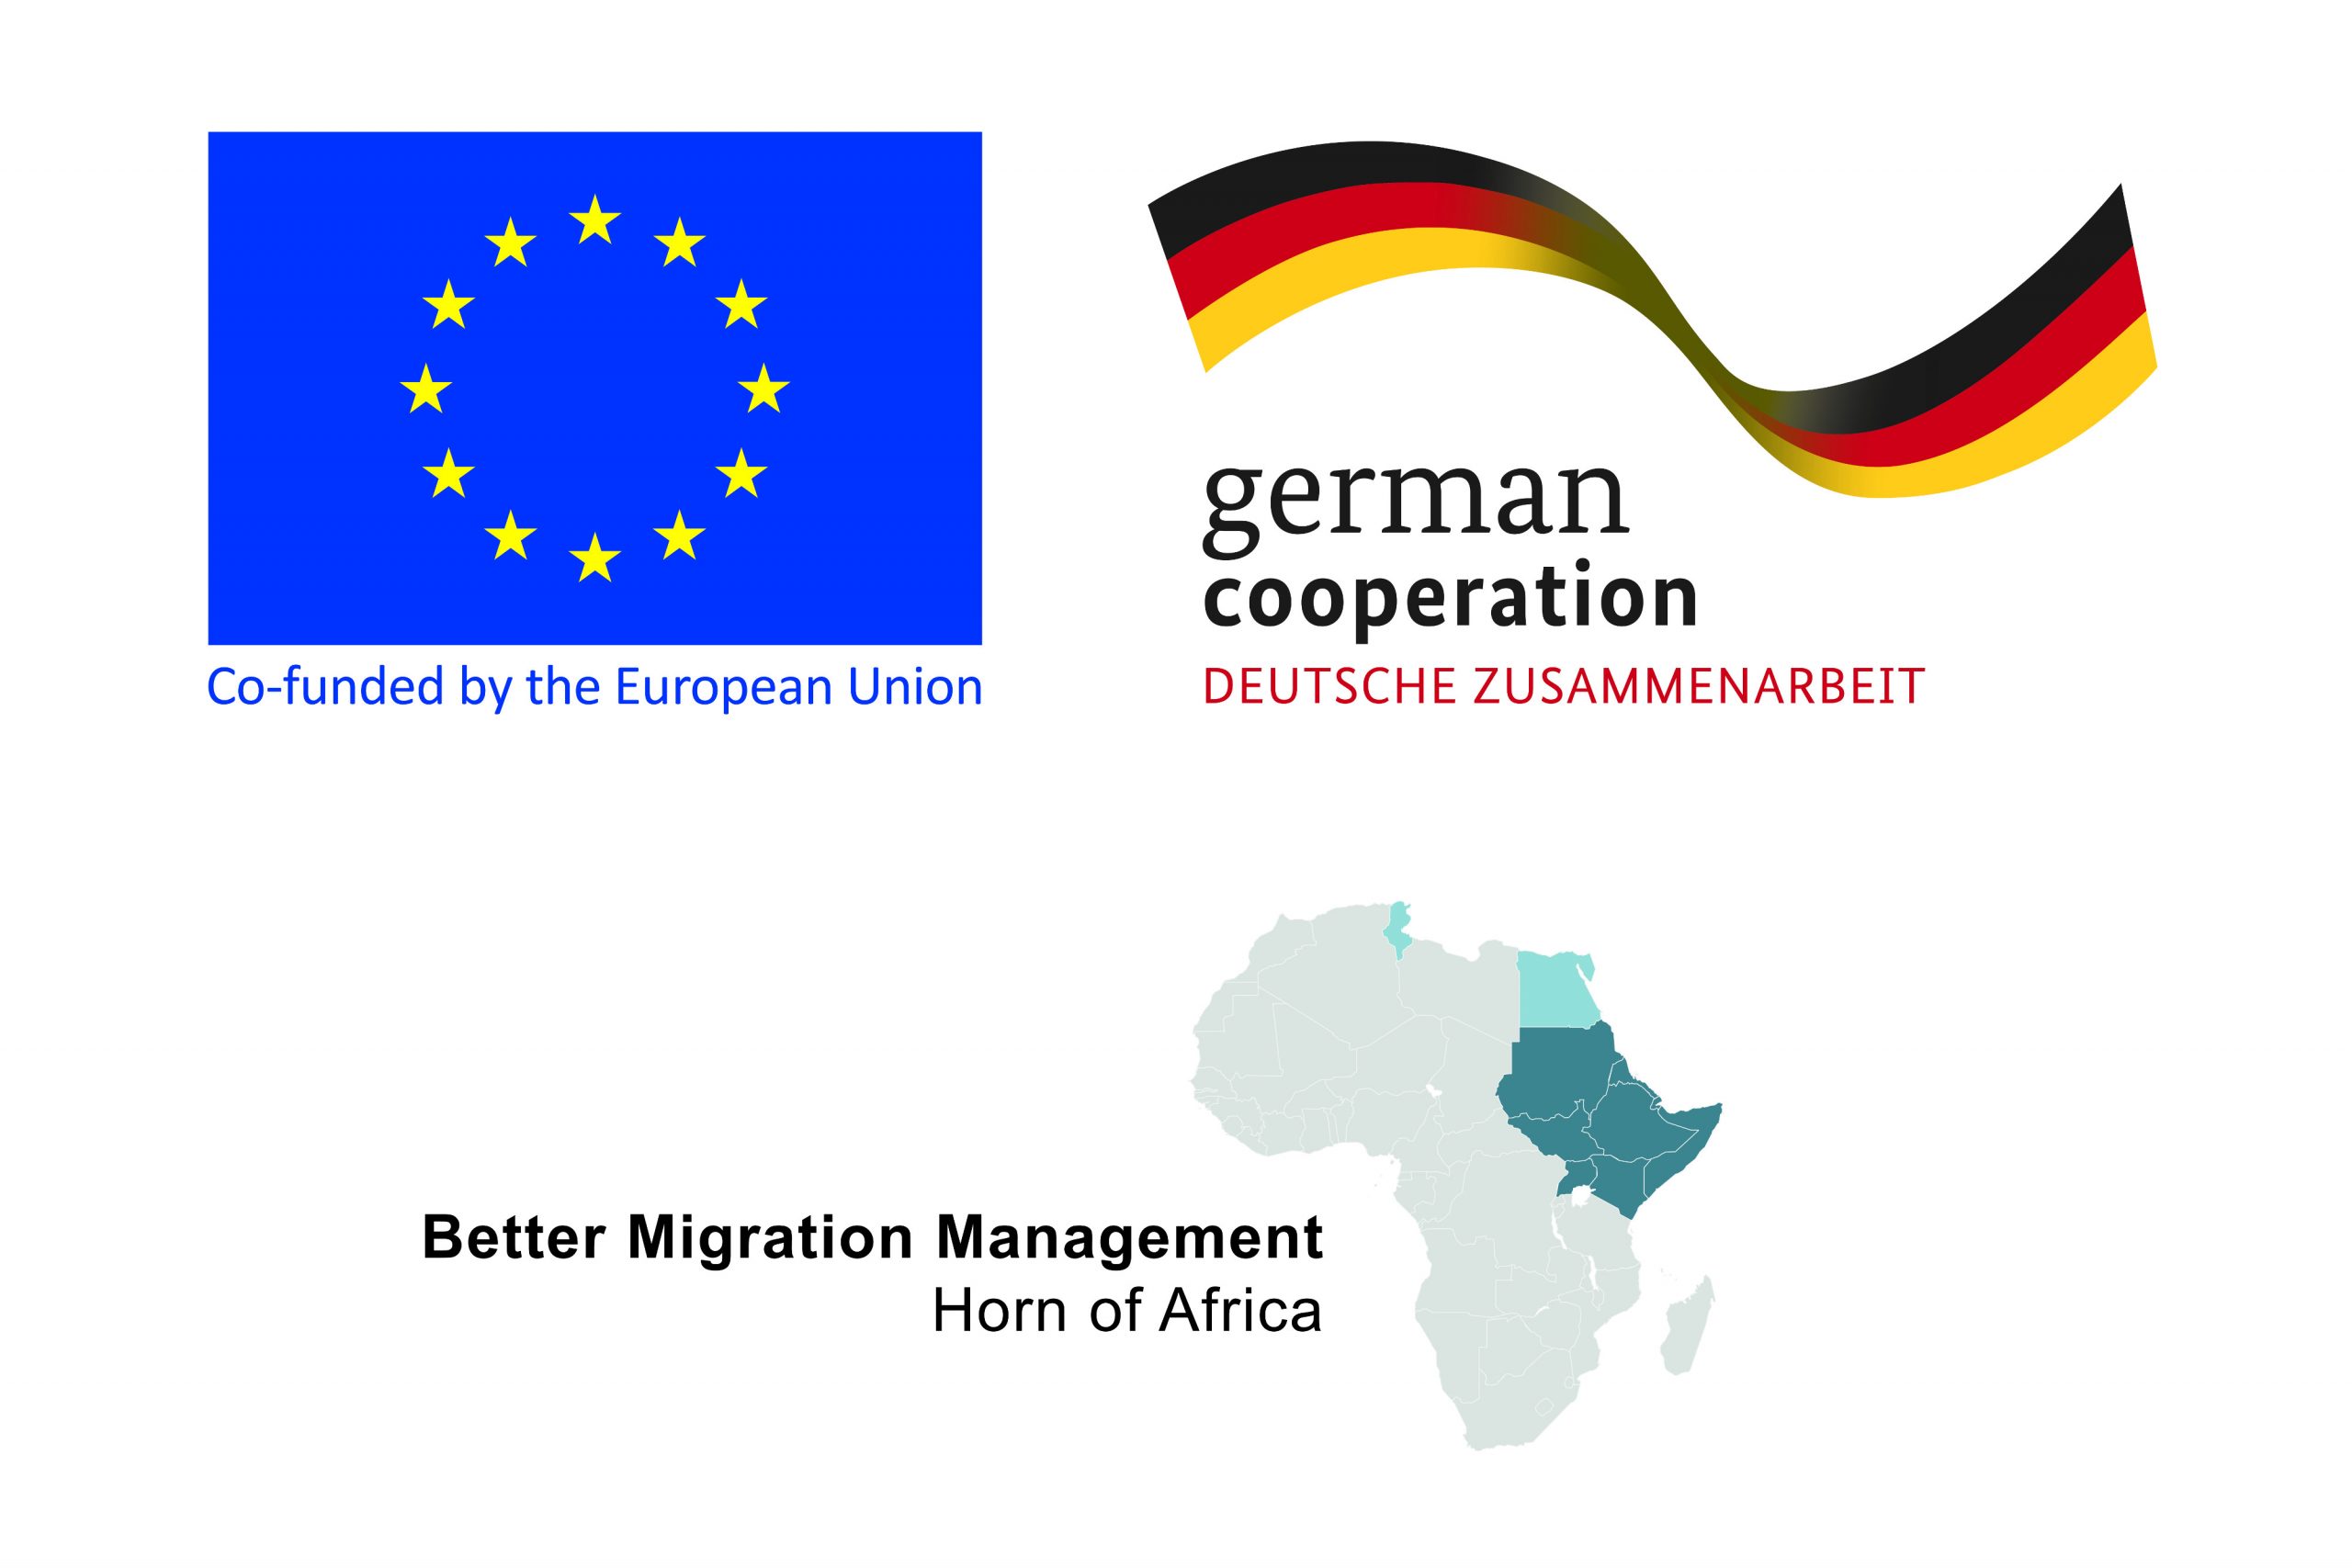 EU, German Cooperation and BMM. logo